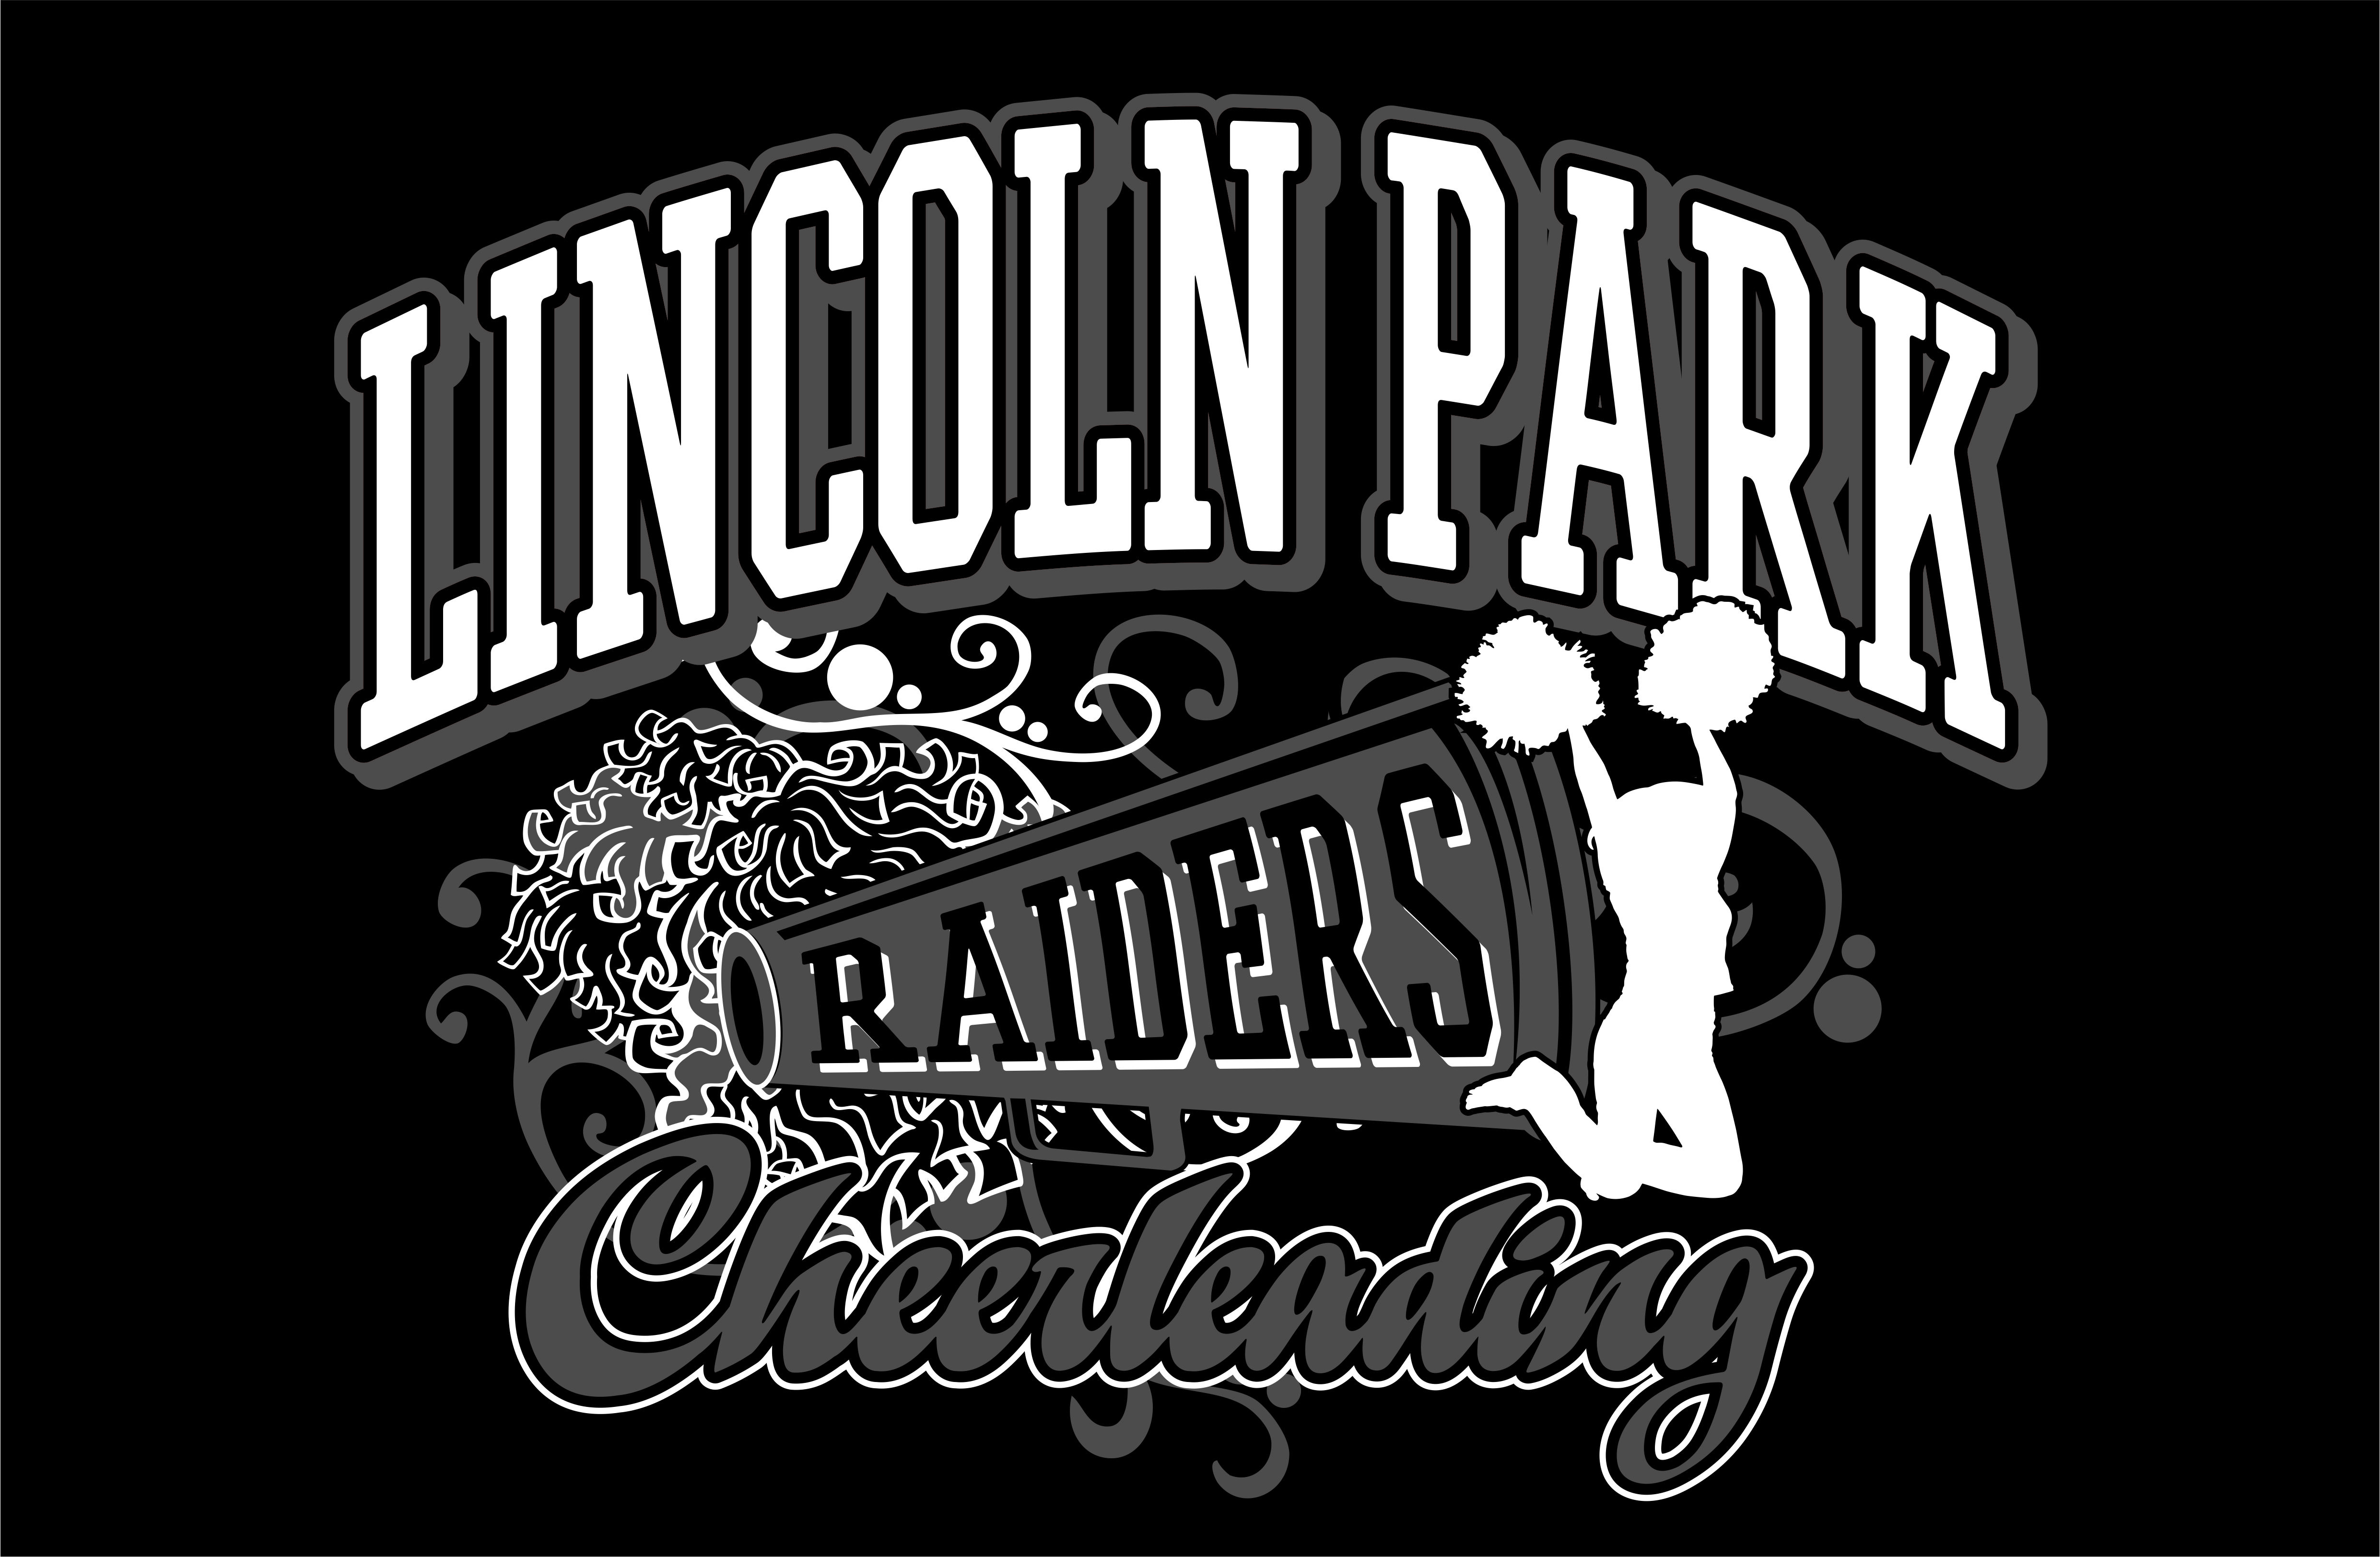 Lincoln Park Raiders Cheerleading Fundraiser